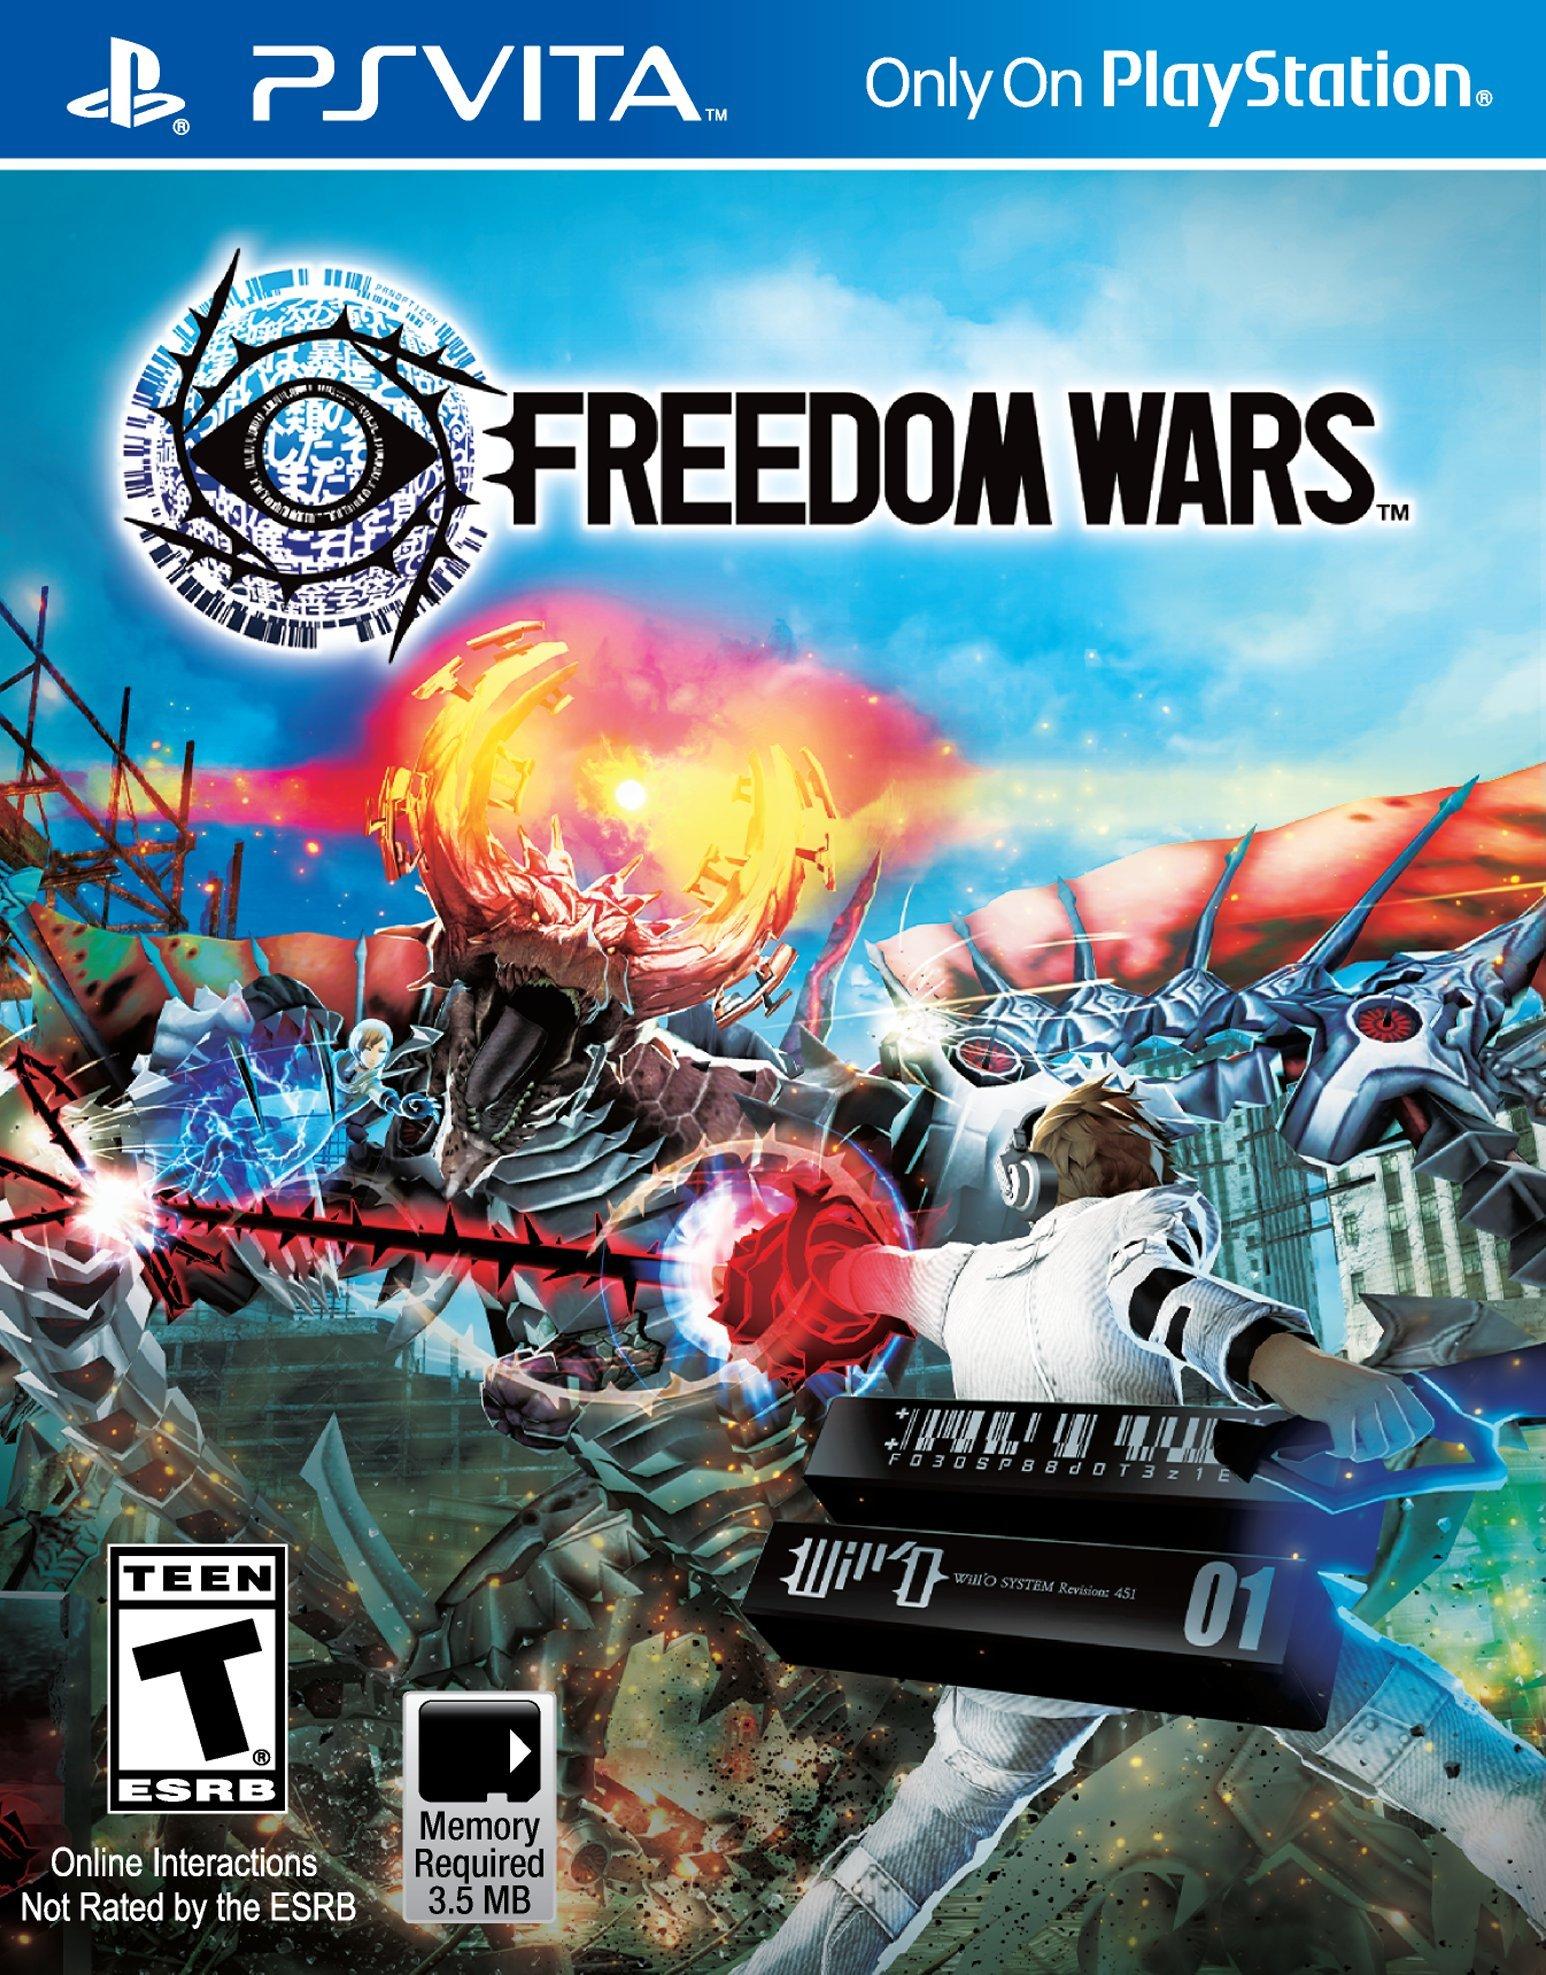 Freedom-Wars